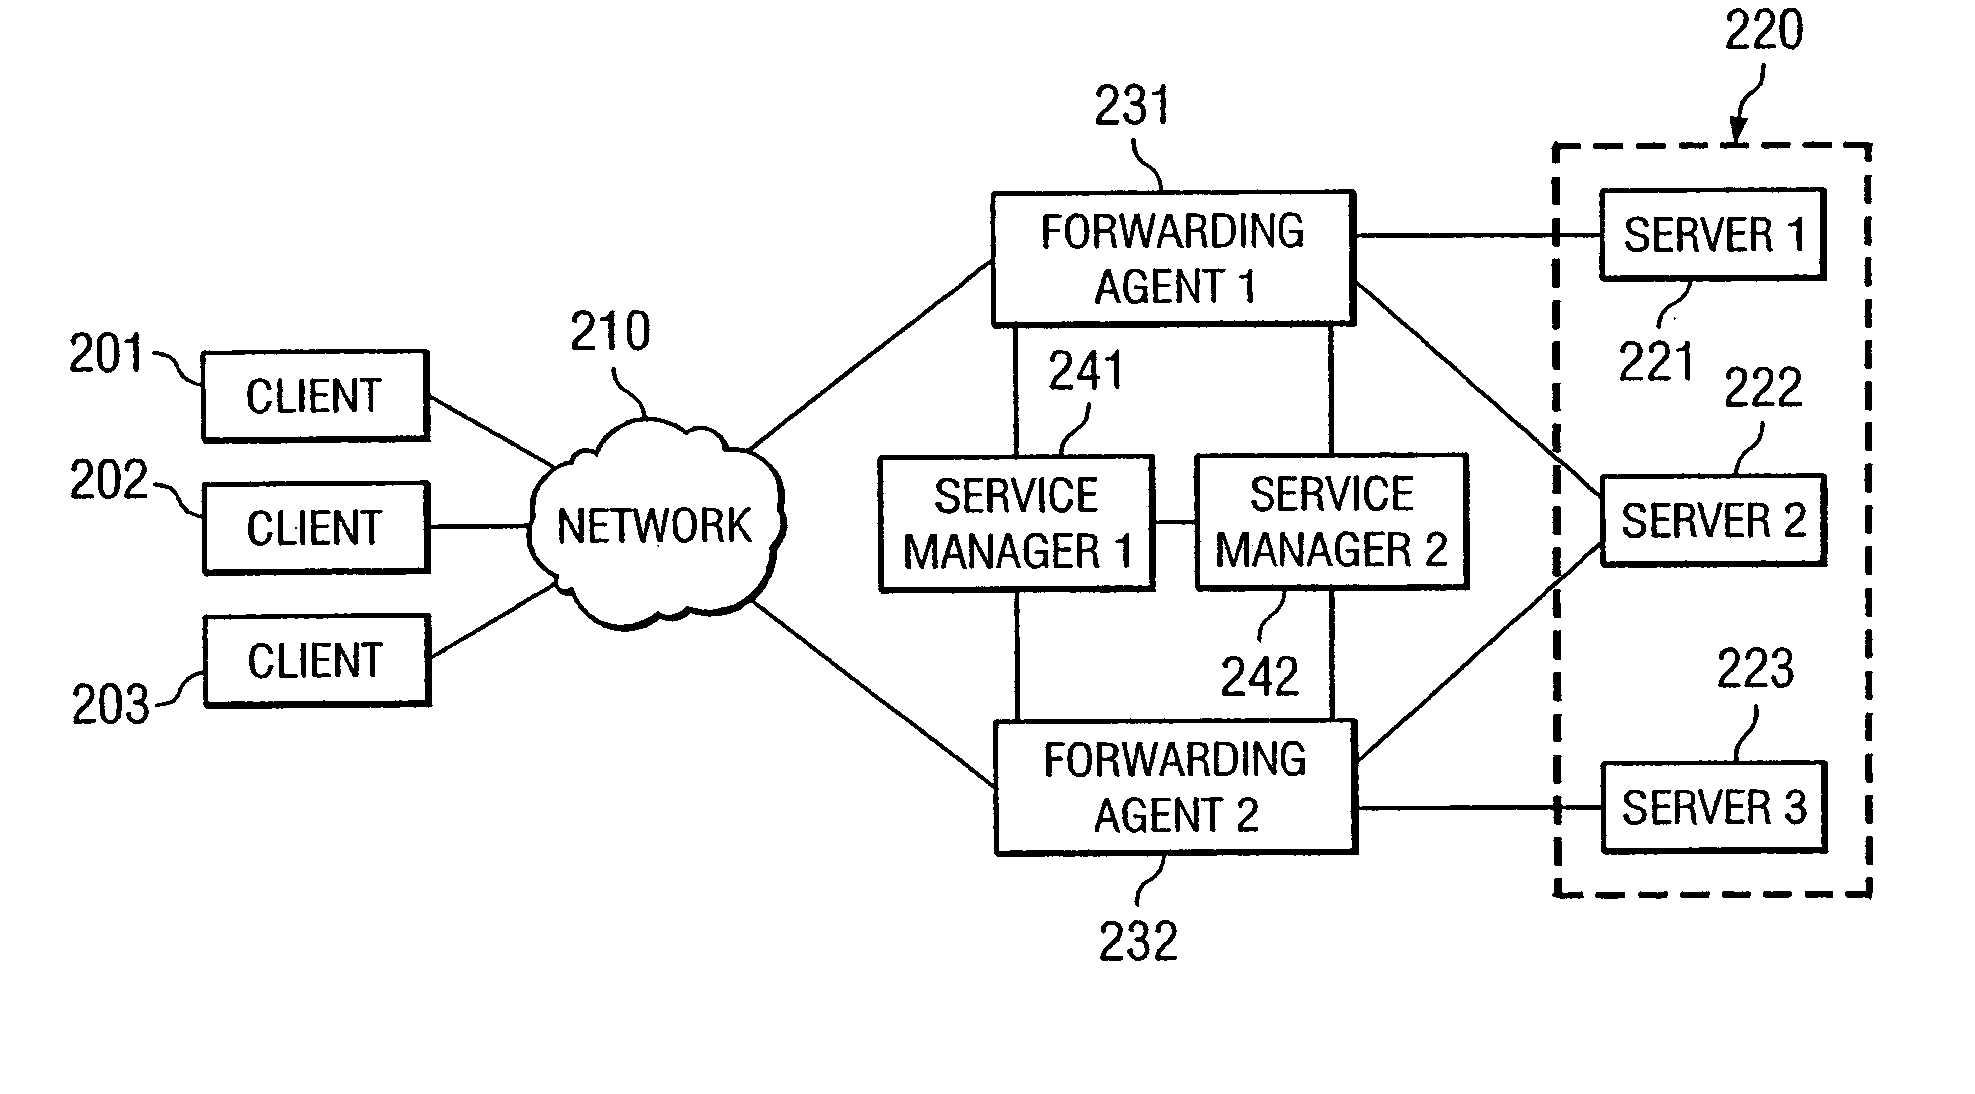 Network address translation using a forwarding agent